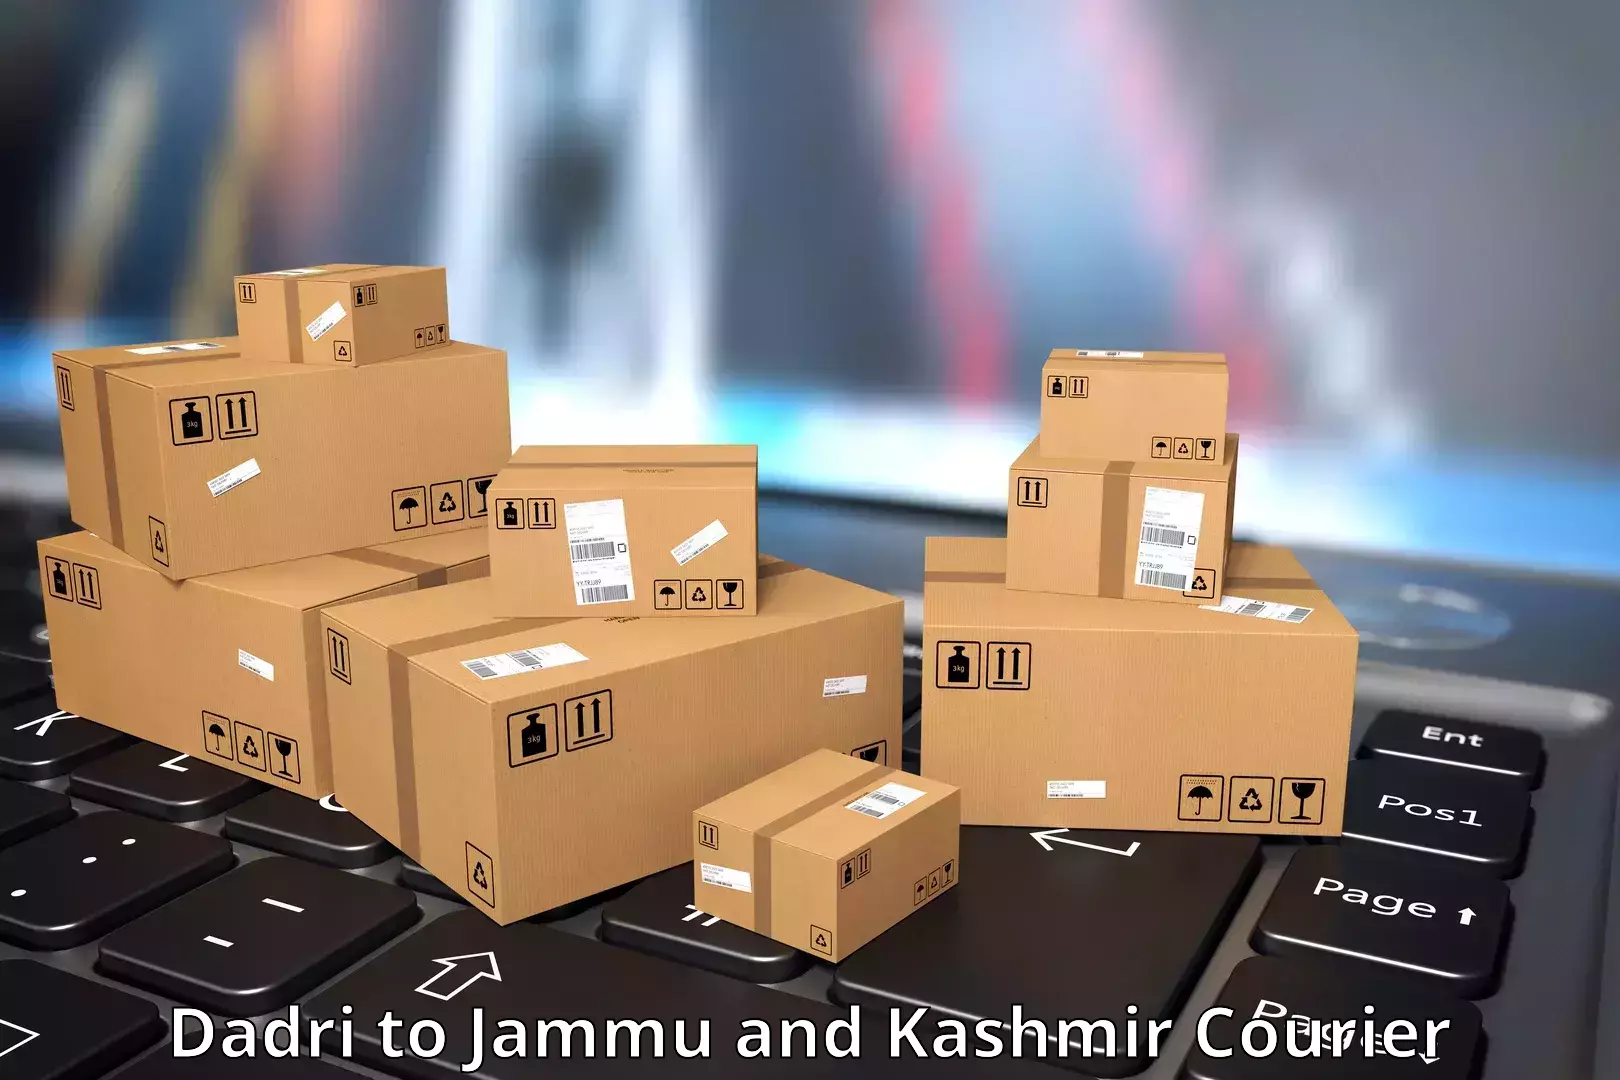 High-speed parcel service Dadri to Jammu and Kashmir